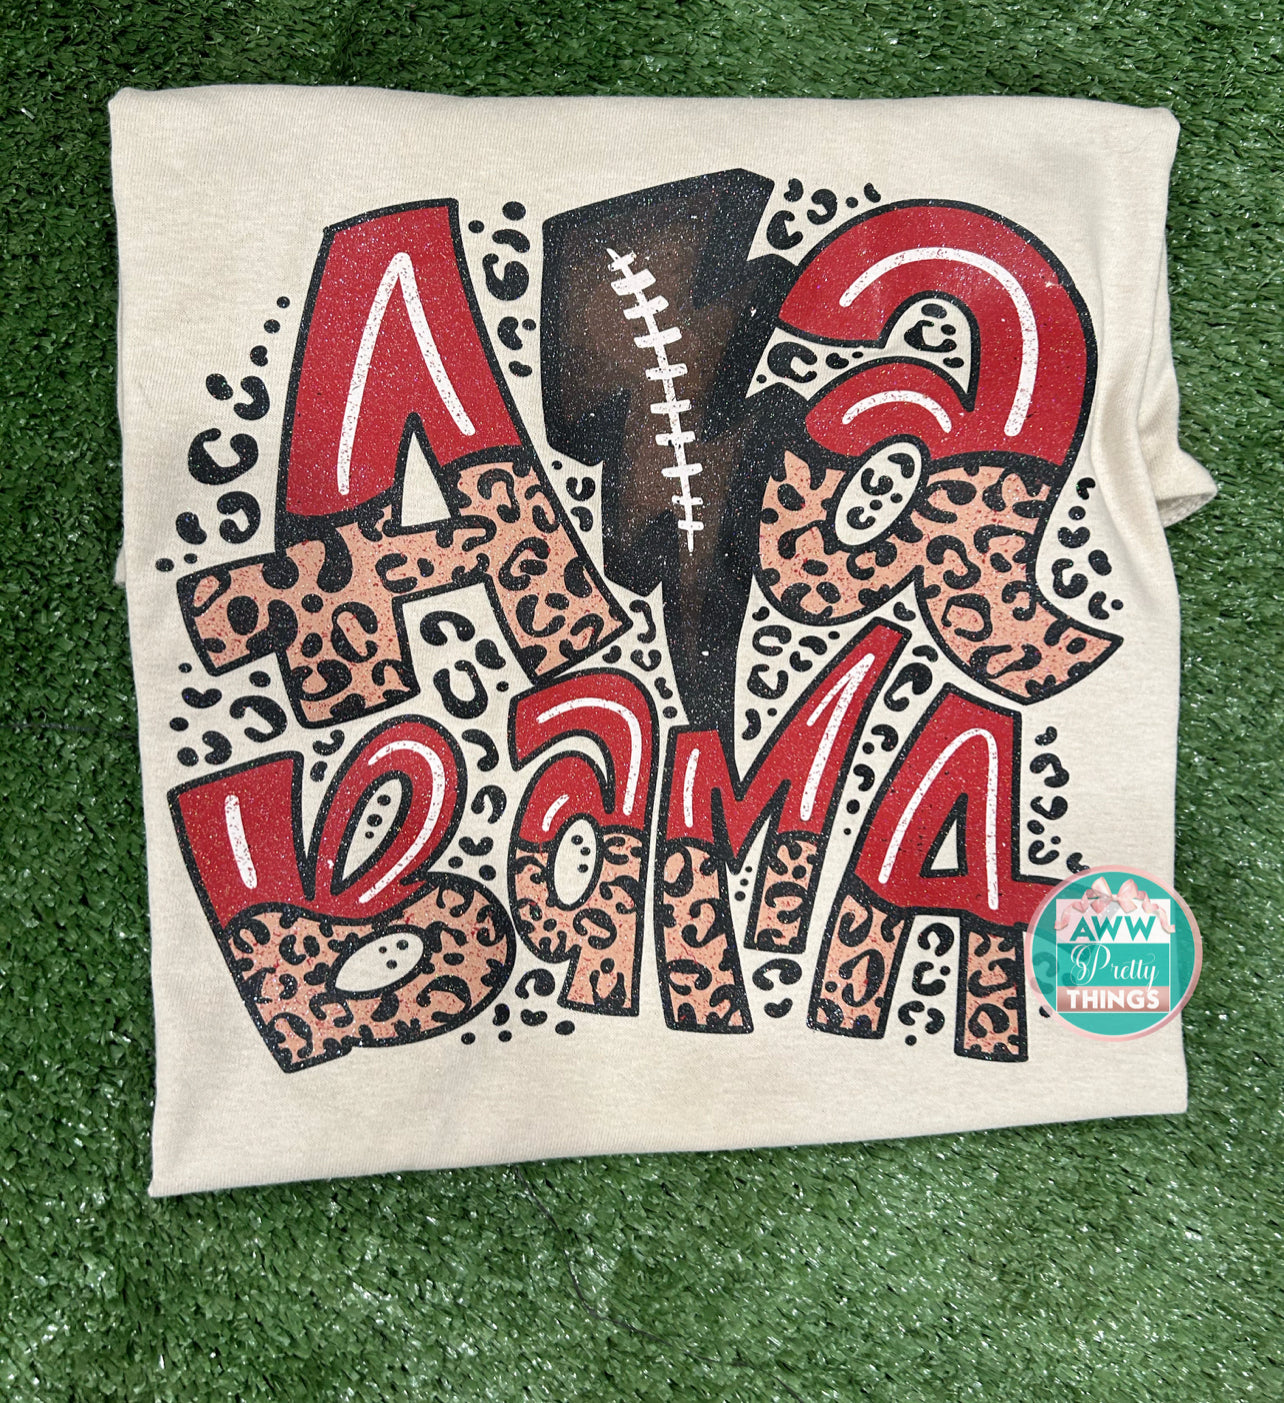 Alabama Football Leopard T-Shirt